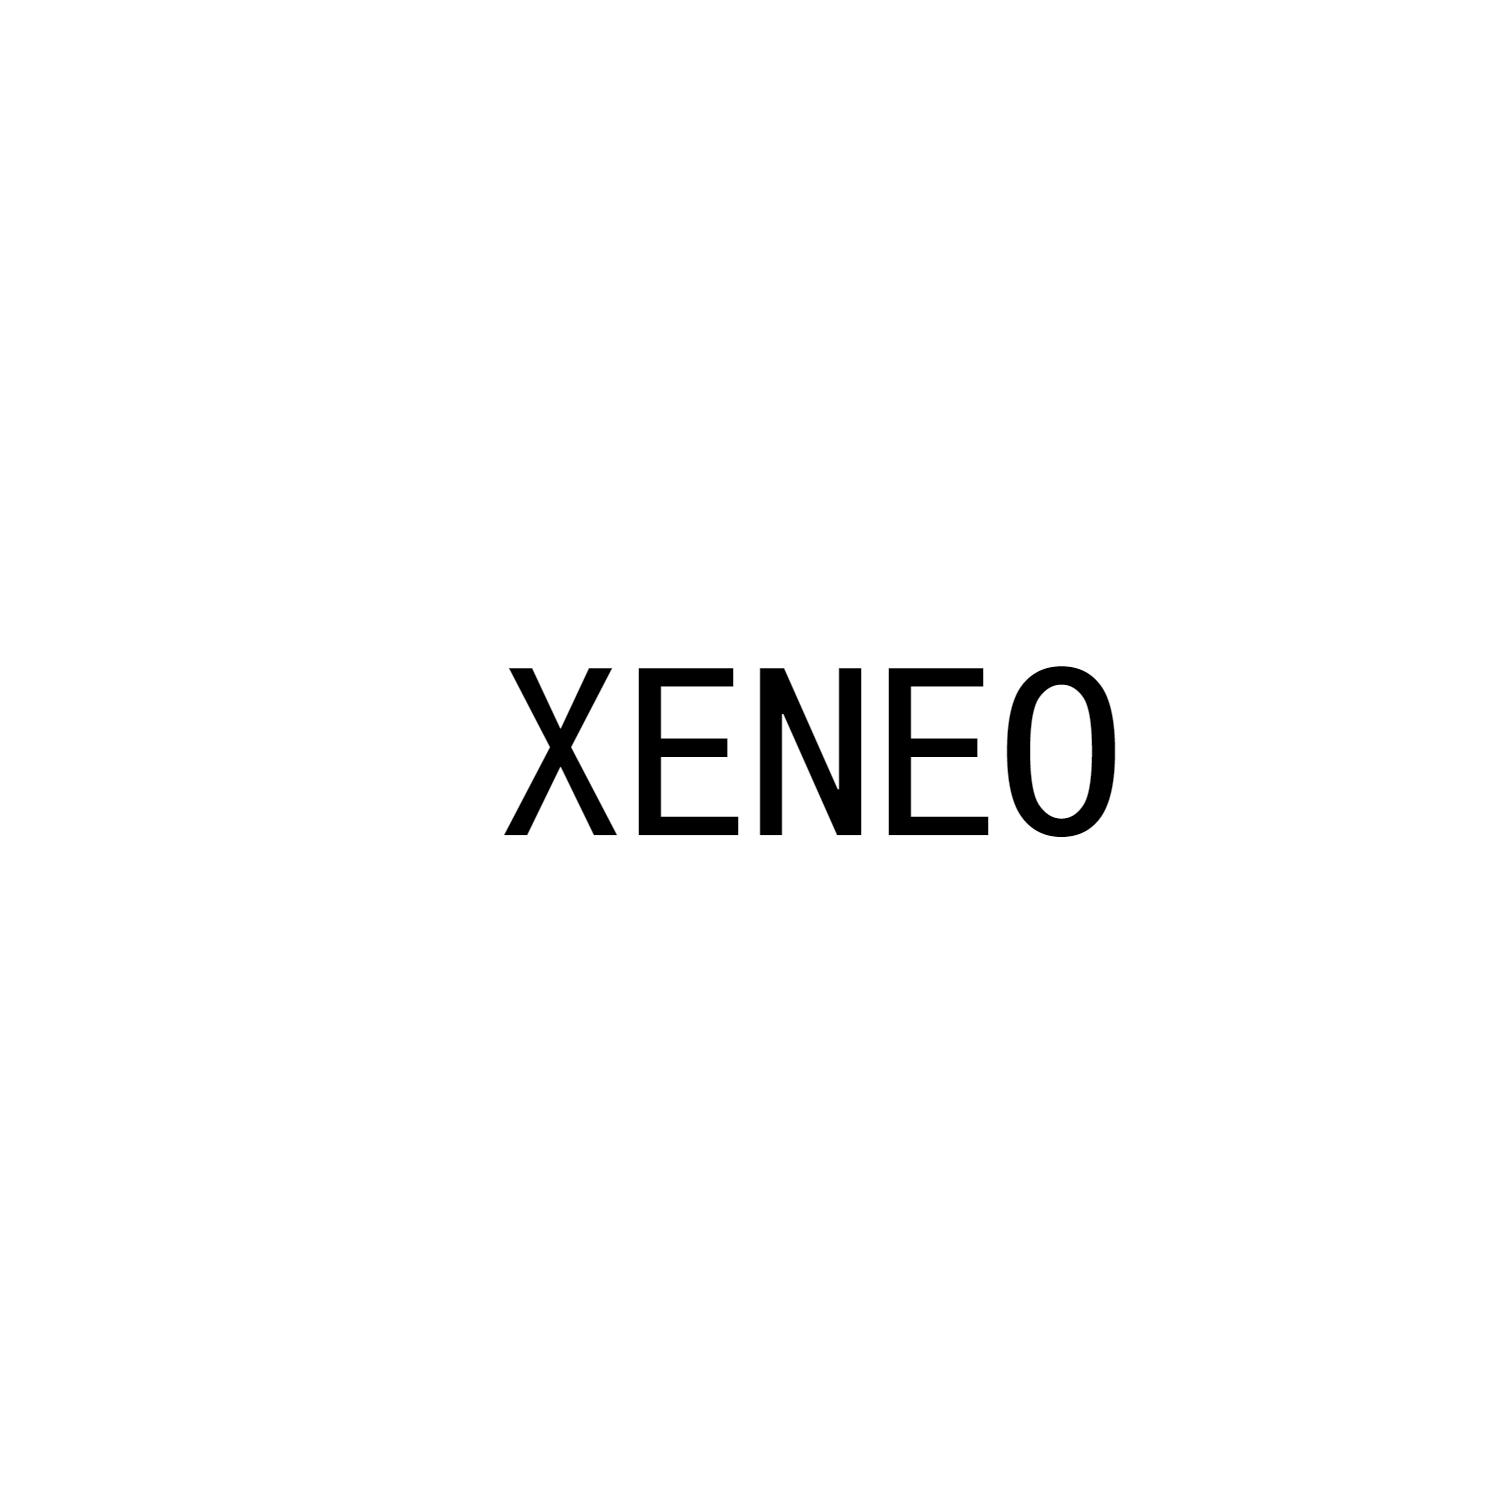 XENEO